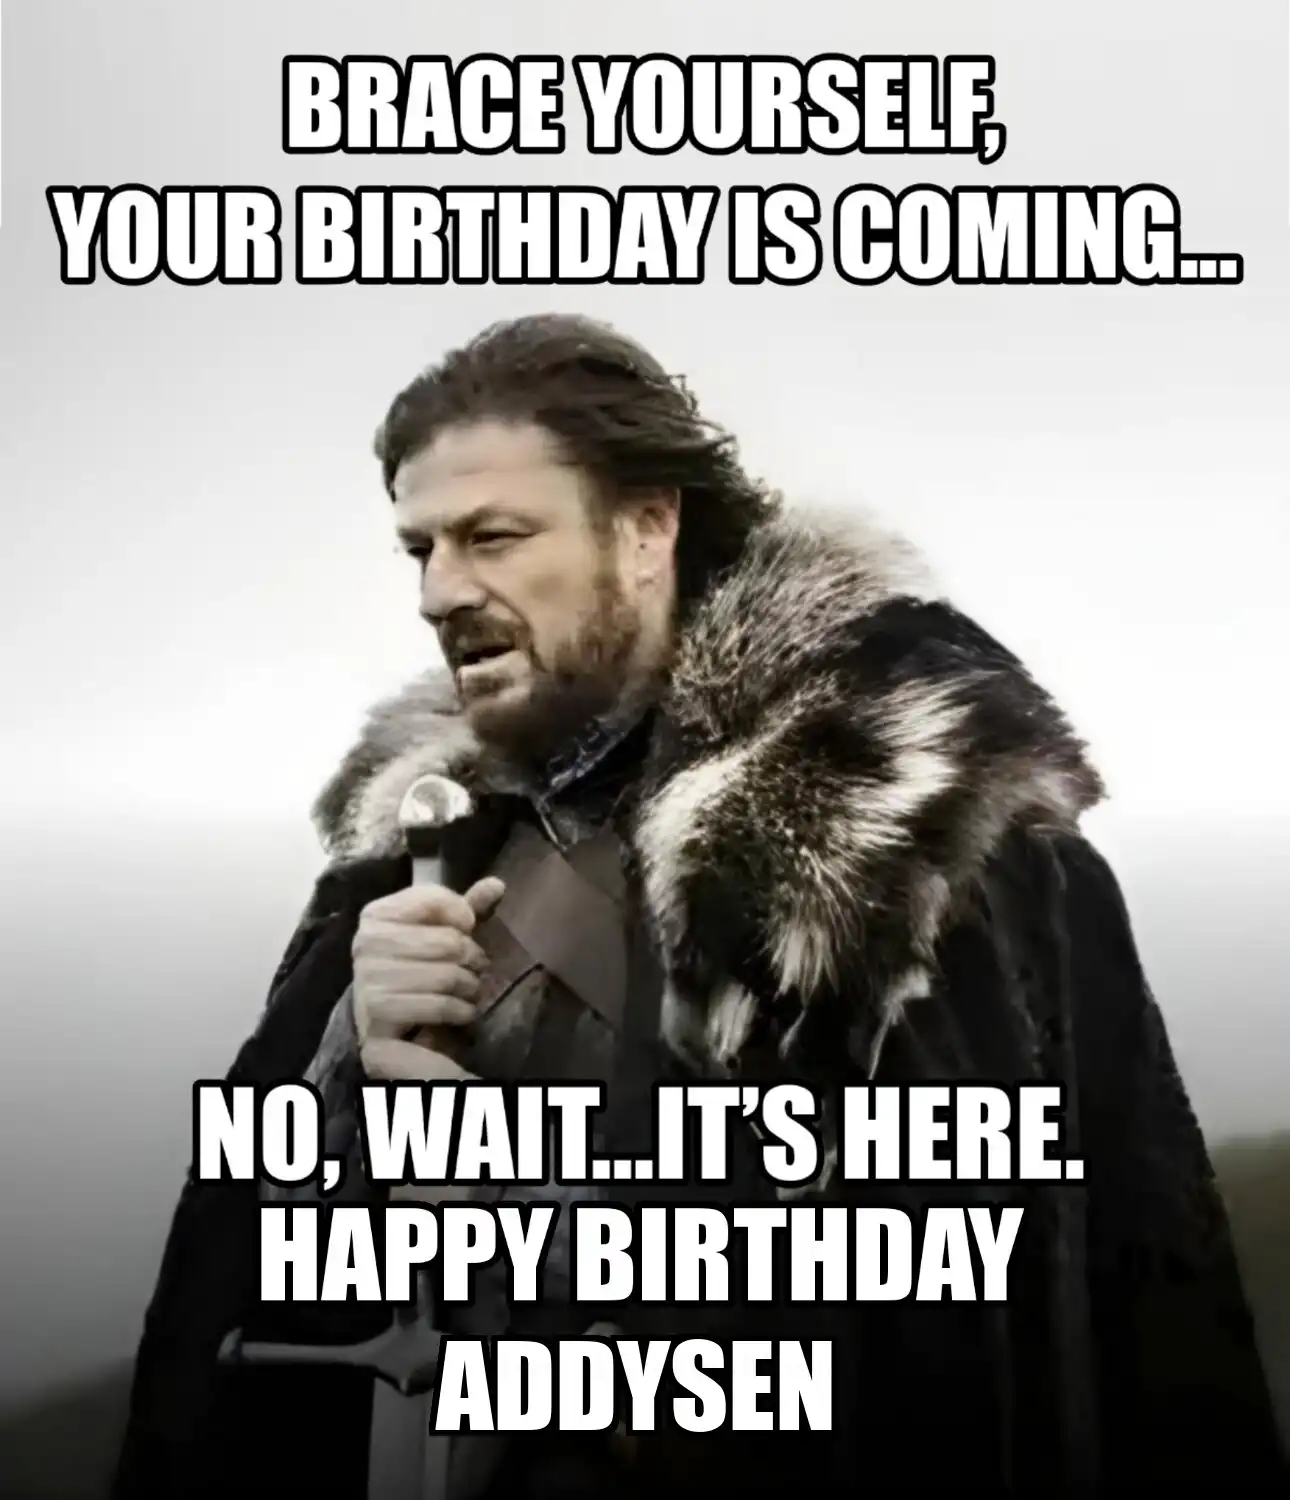 Happy Birthday Addysen Brace Yourself Your Birthday Is Coming Meme